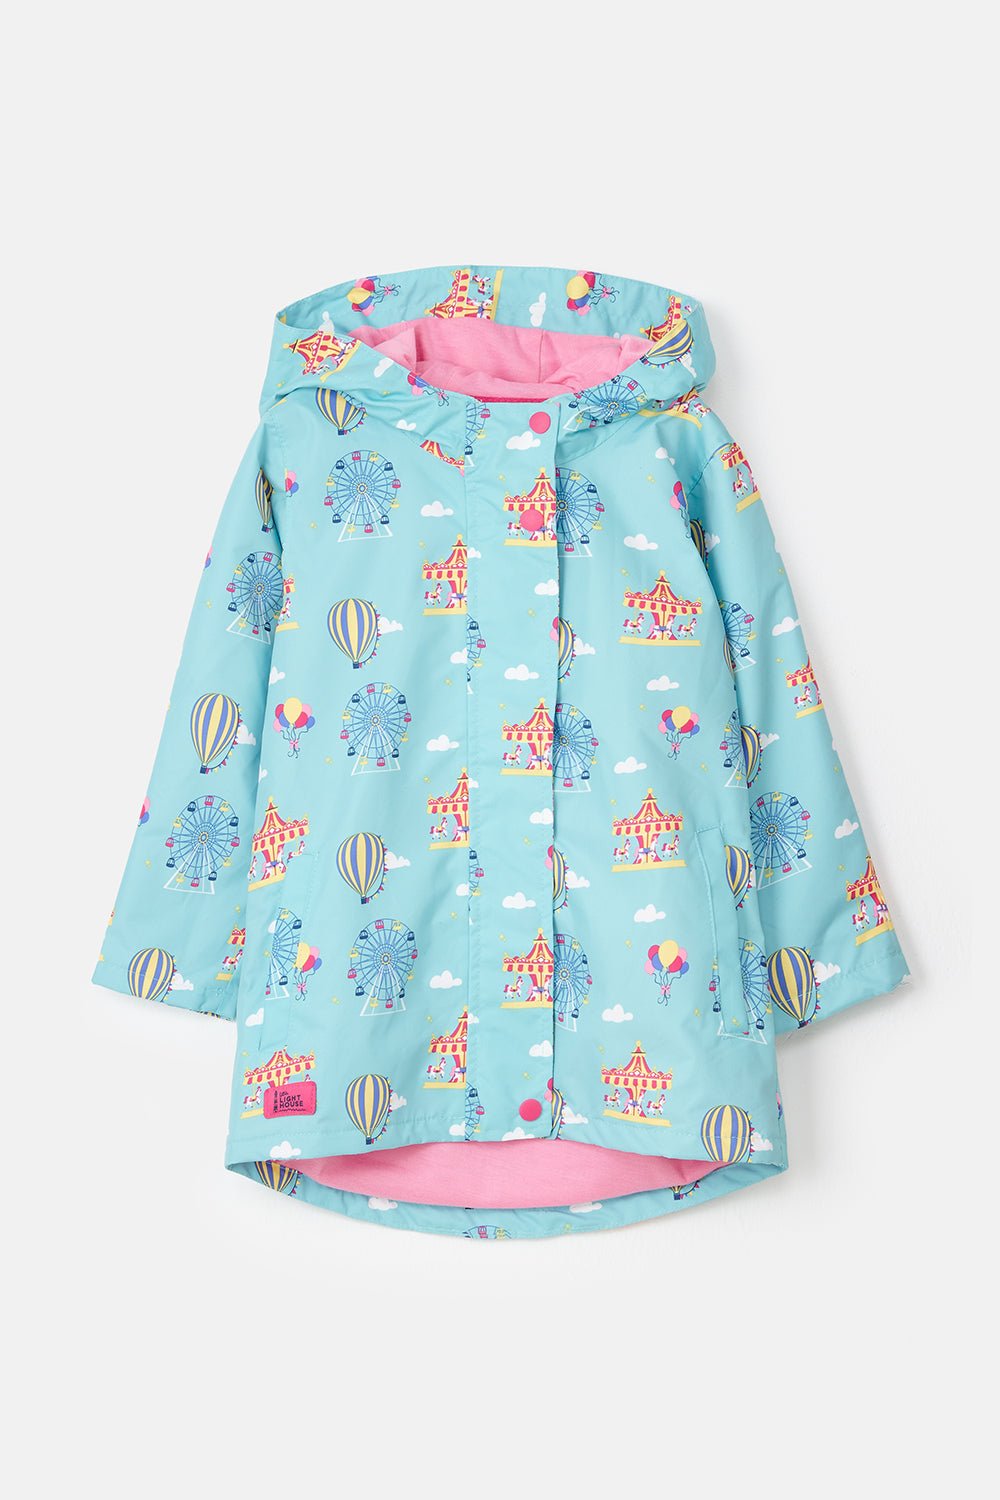 Olivia girls' rainjacket, Carnival Print